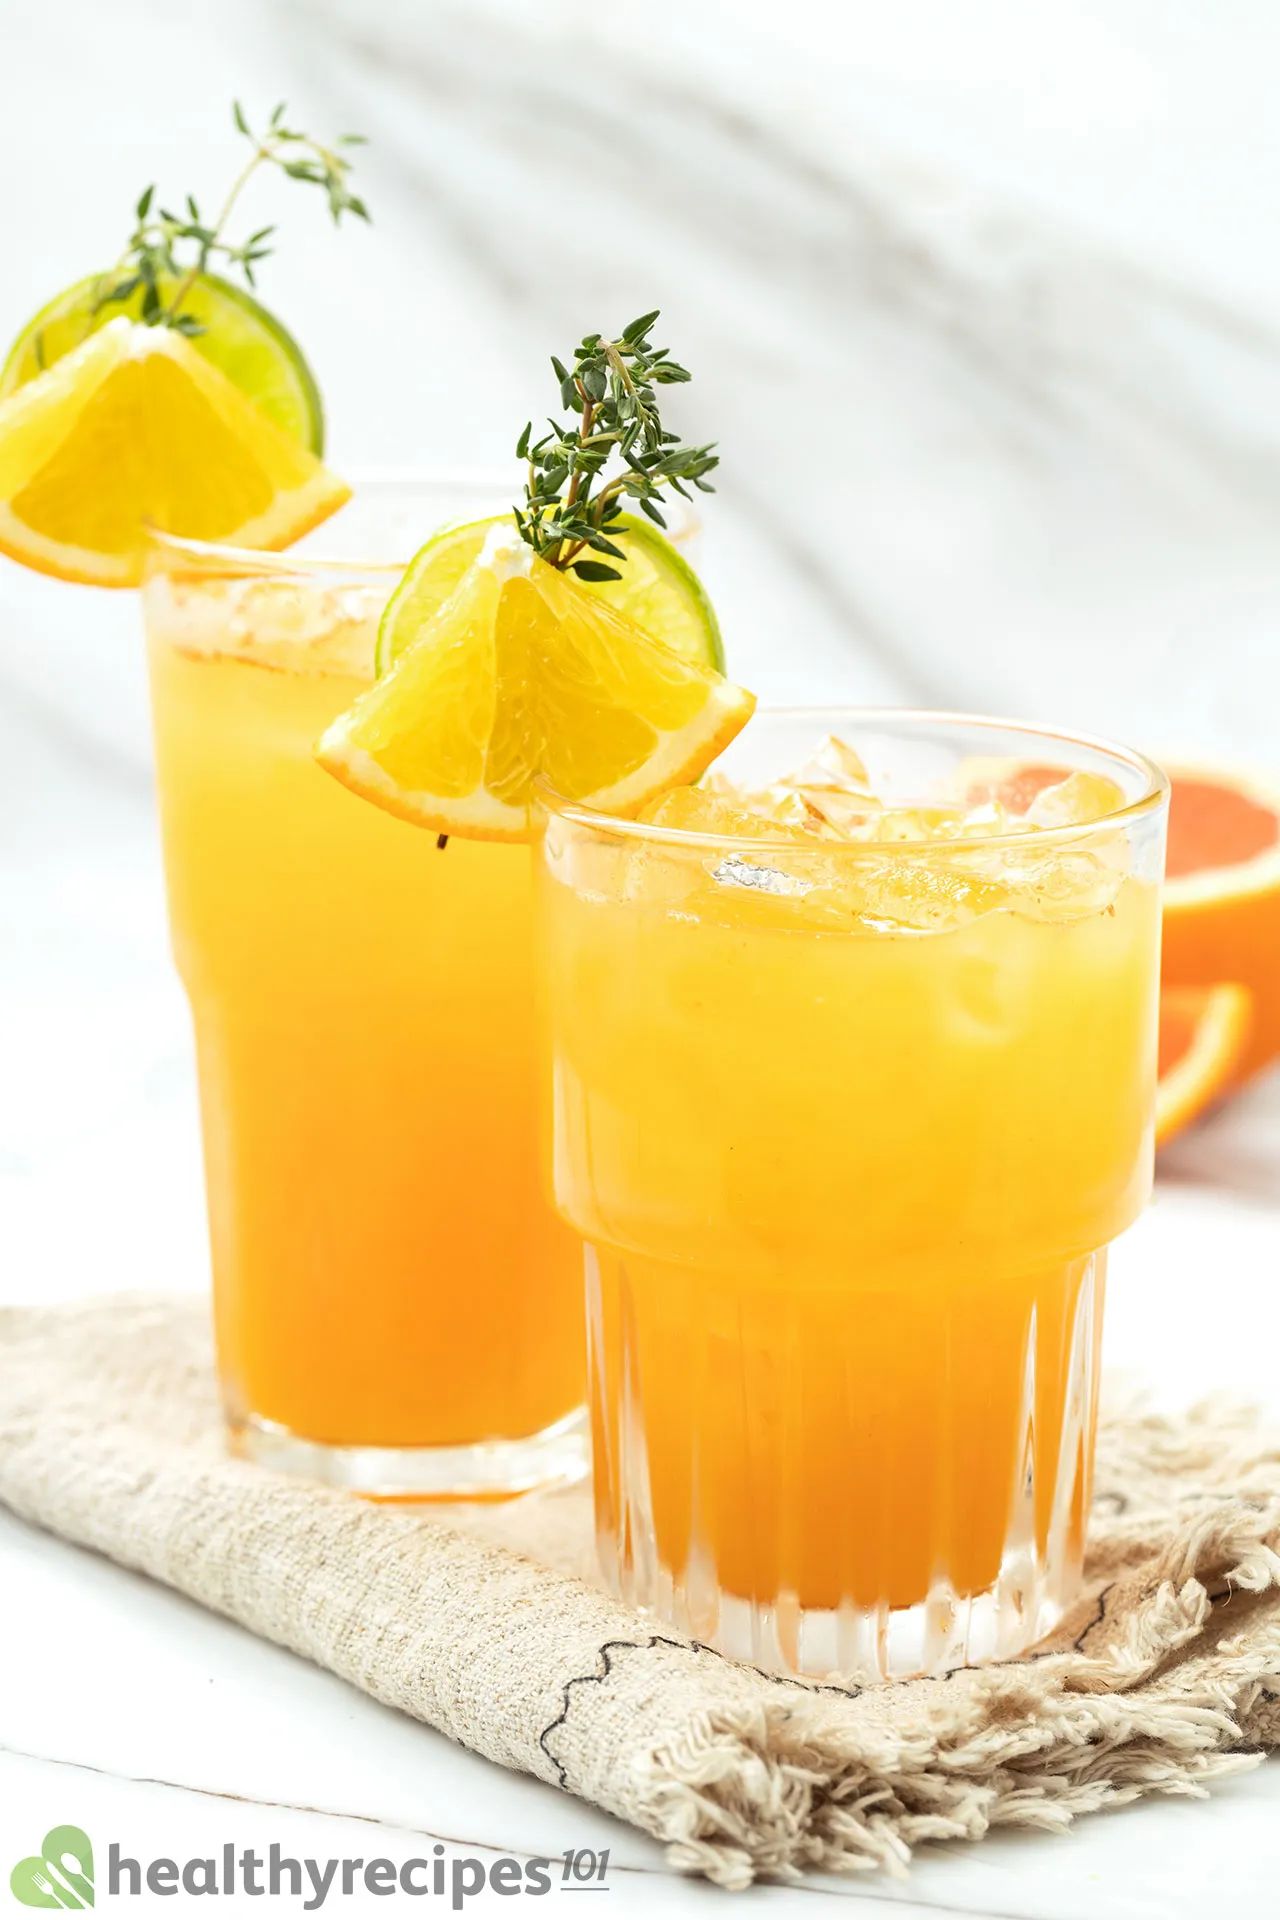 Homemade Gin and Grapefruit Juice Recipe